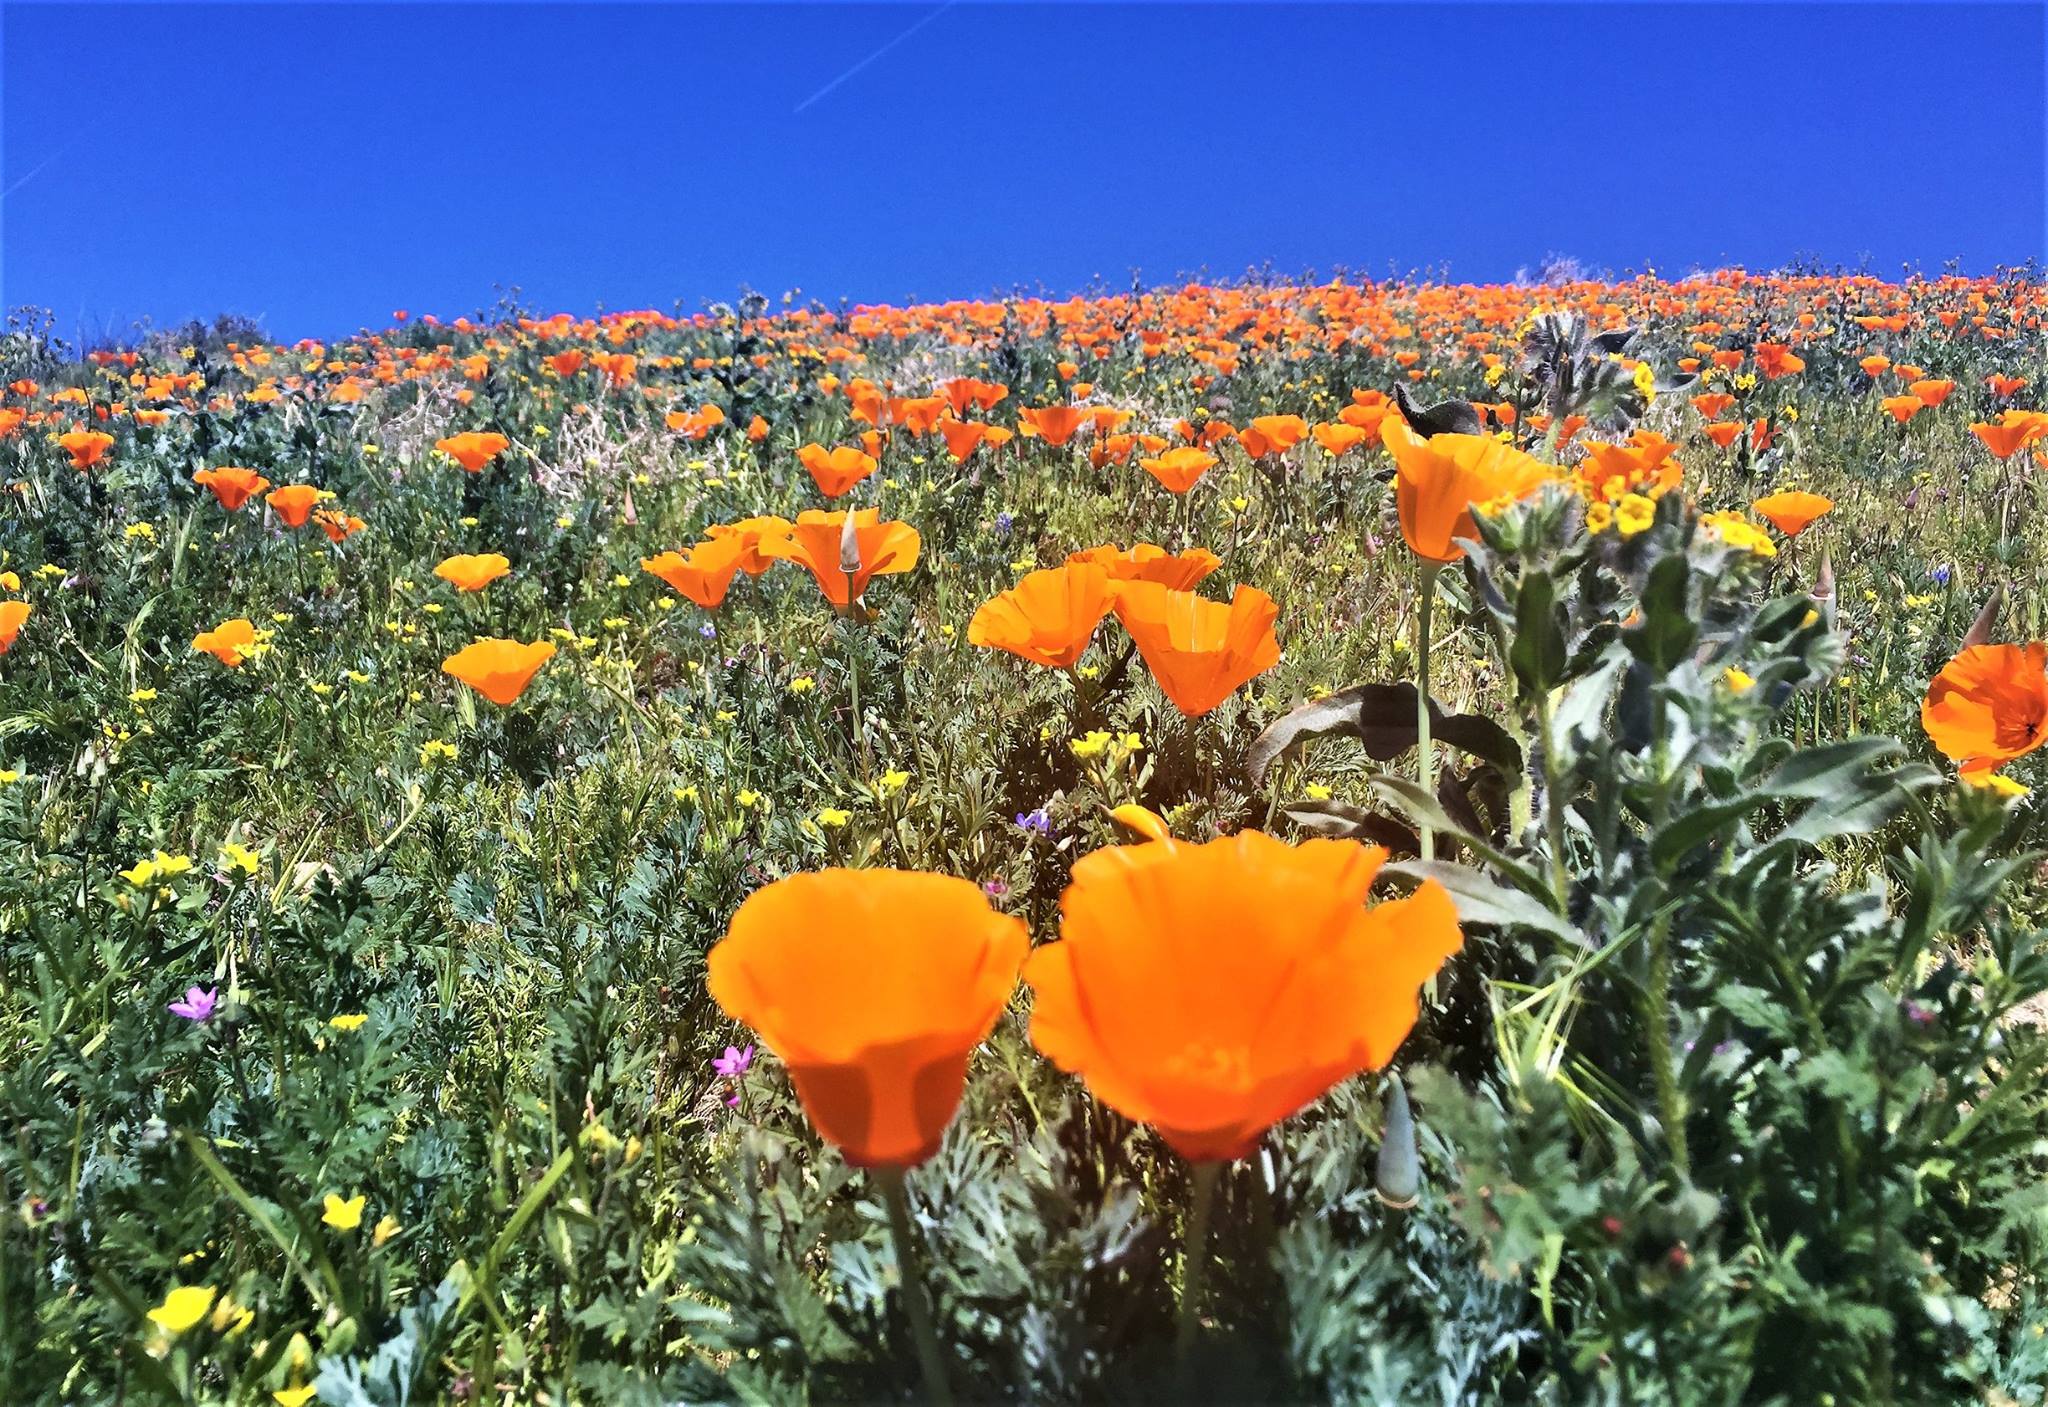 March 1 California Poppy Reserve Center Opens in